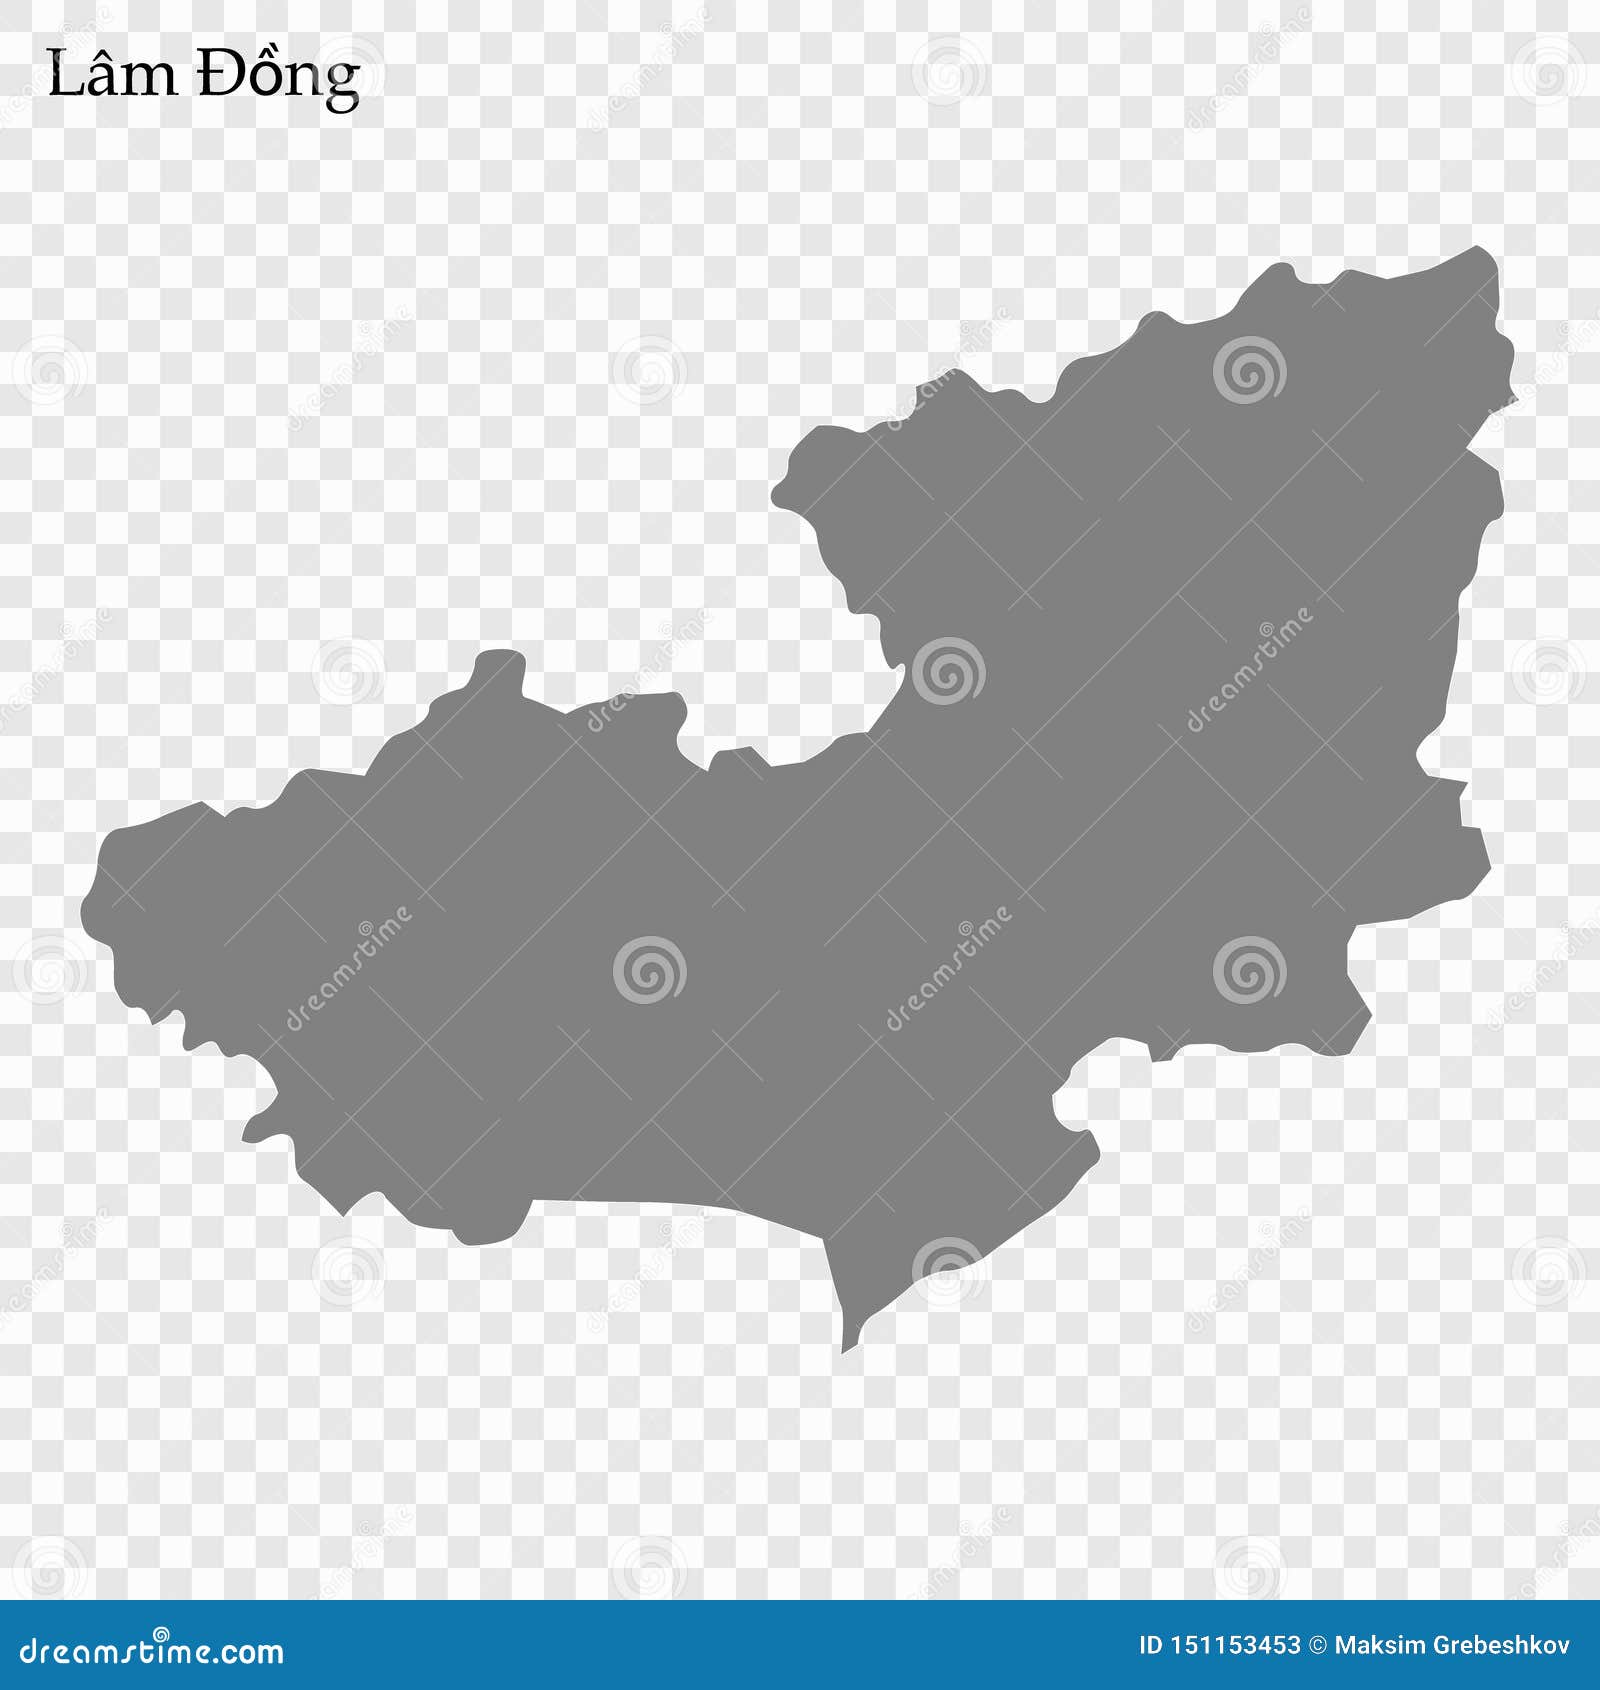 Map of province of Vietnam stock illustration. Illustration of ...